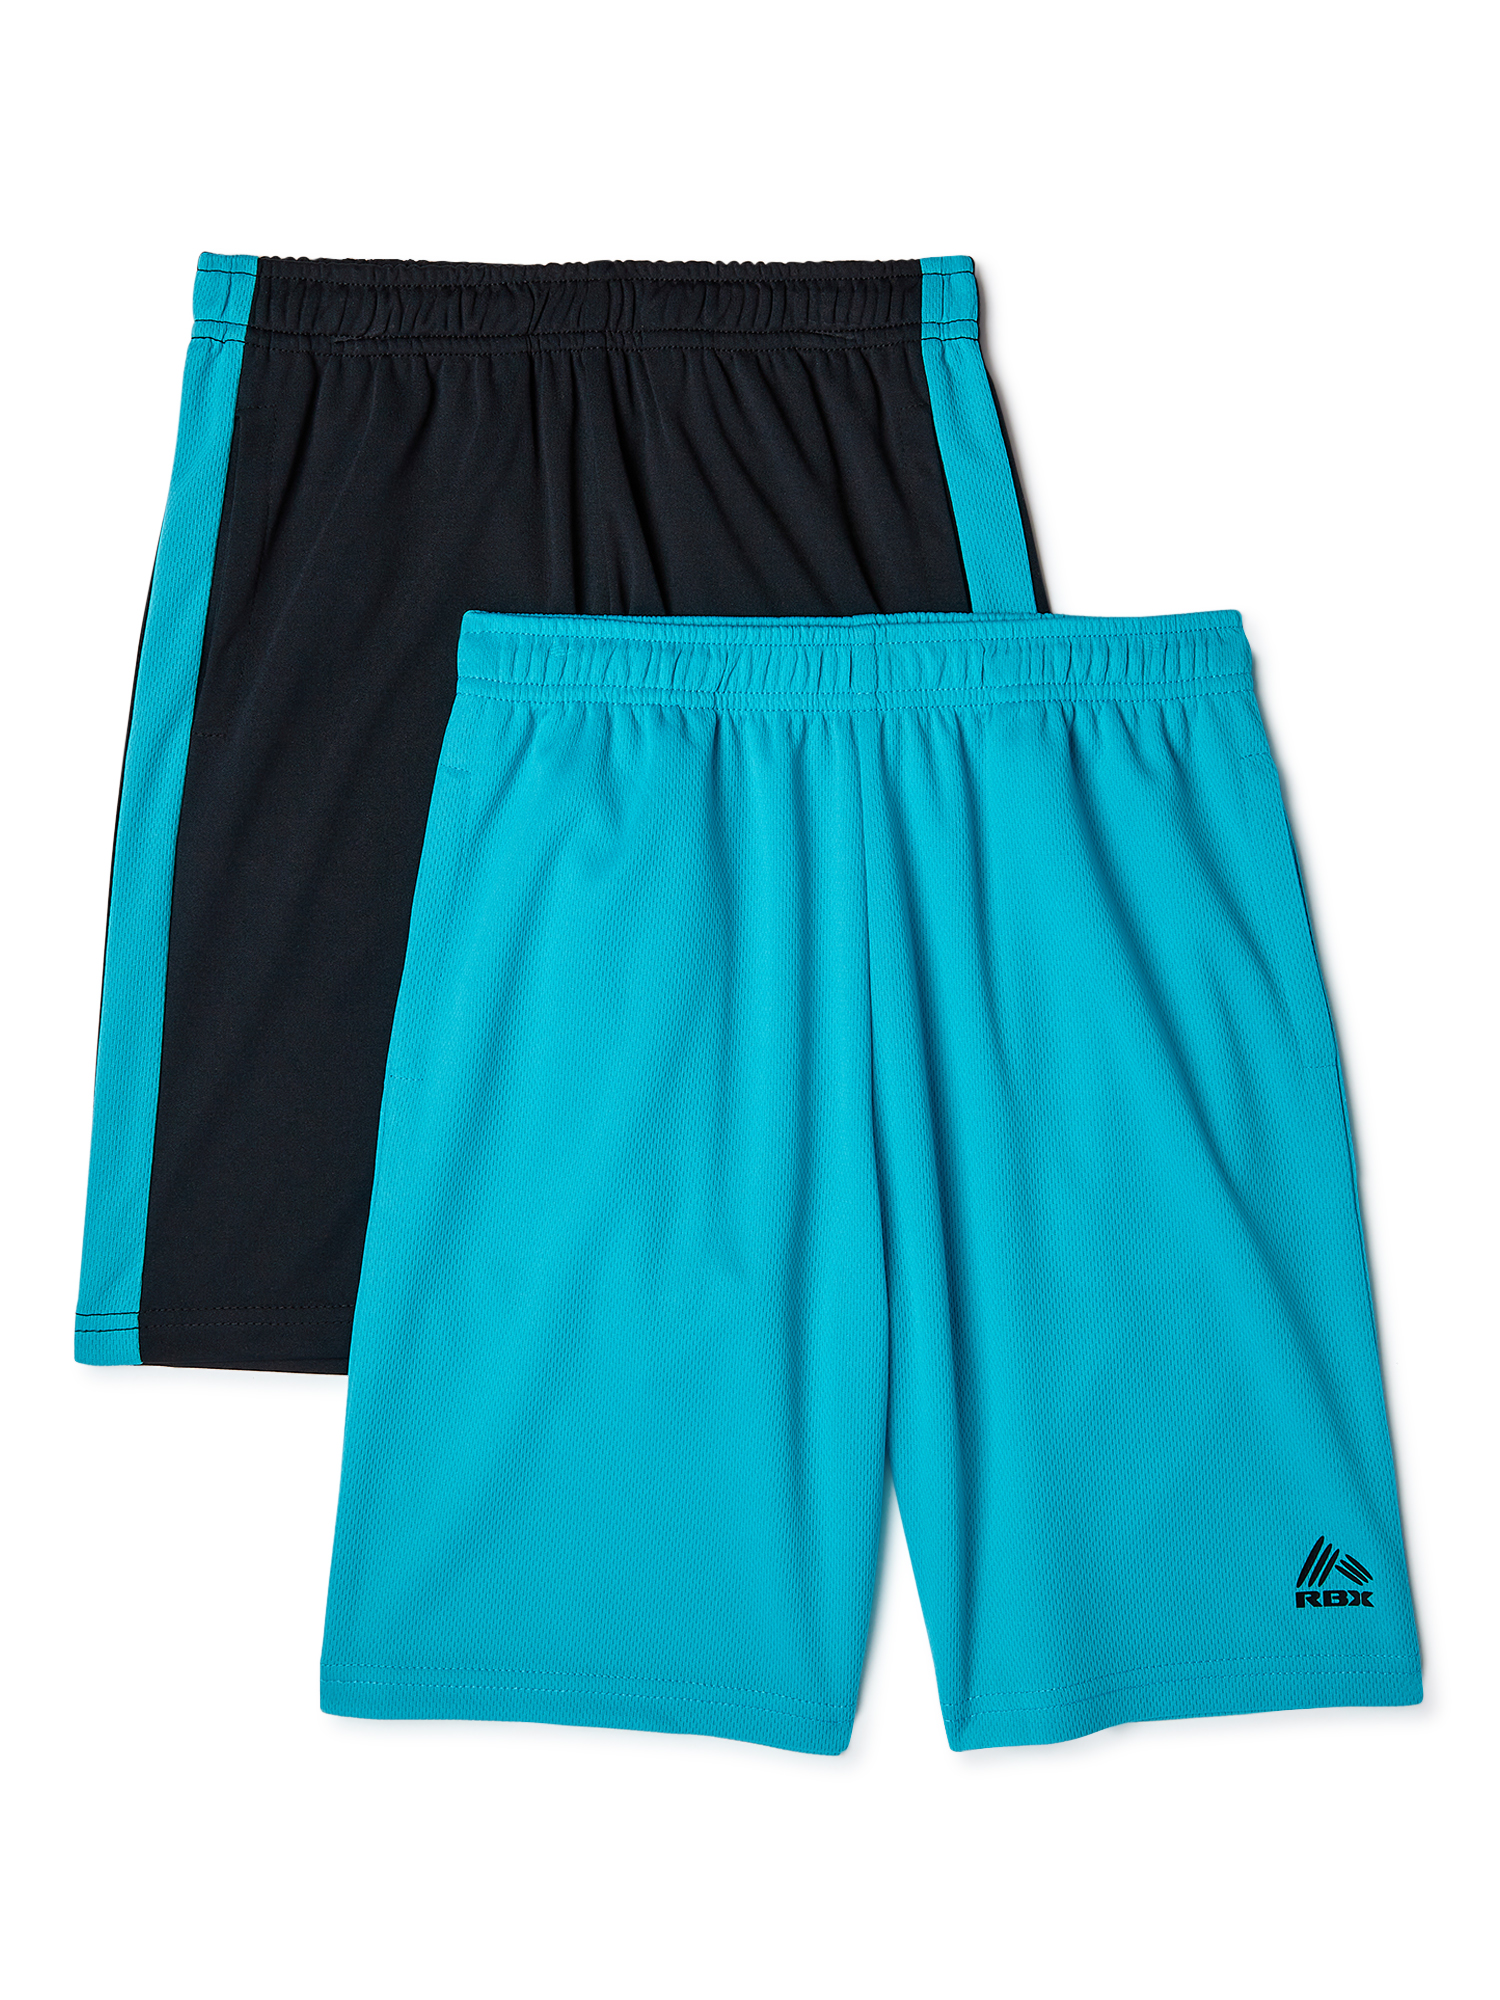 Little Boy//Big Boy STX Boys Active Shorts 2 Pack Lightweight Athletic Shorts